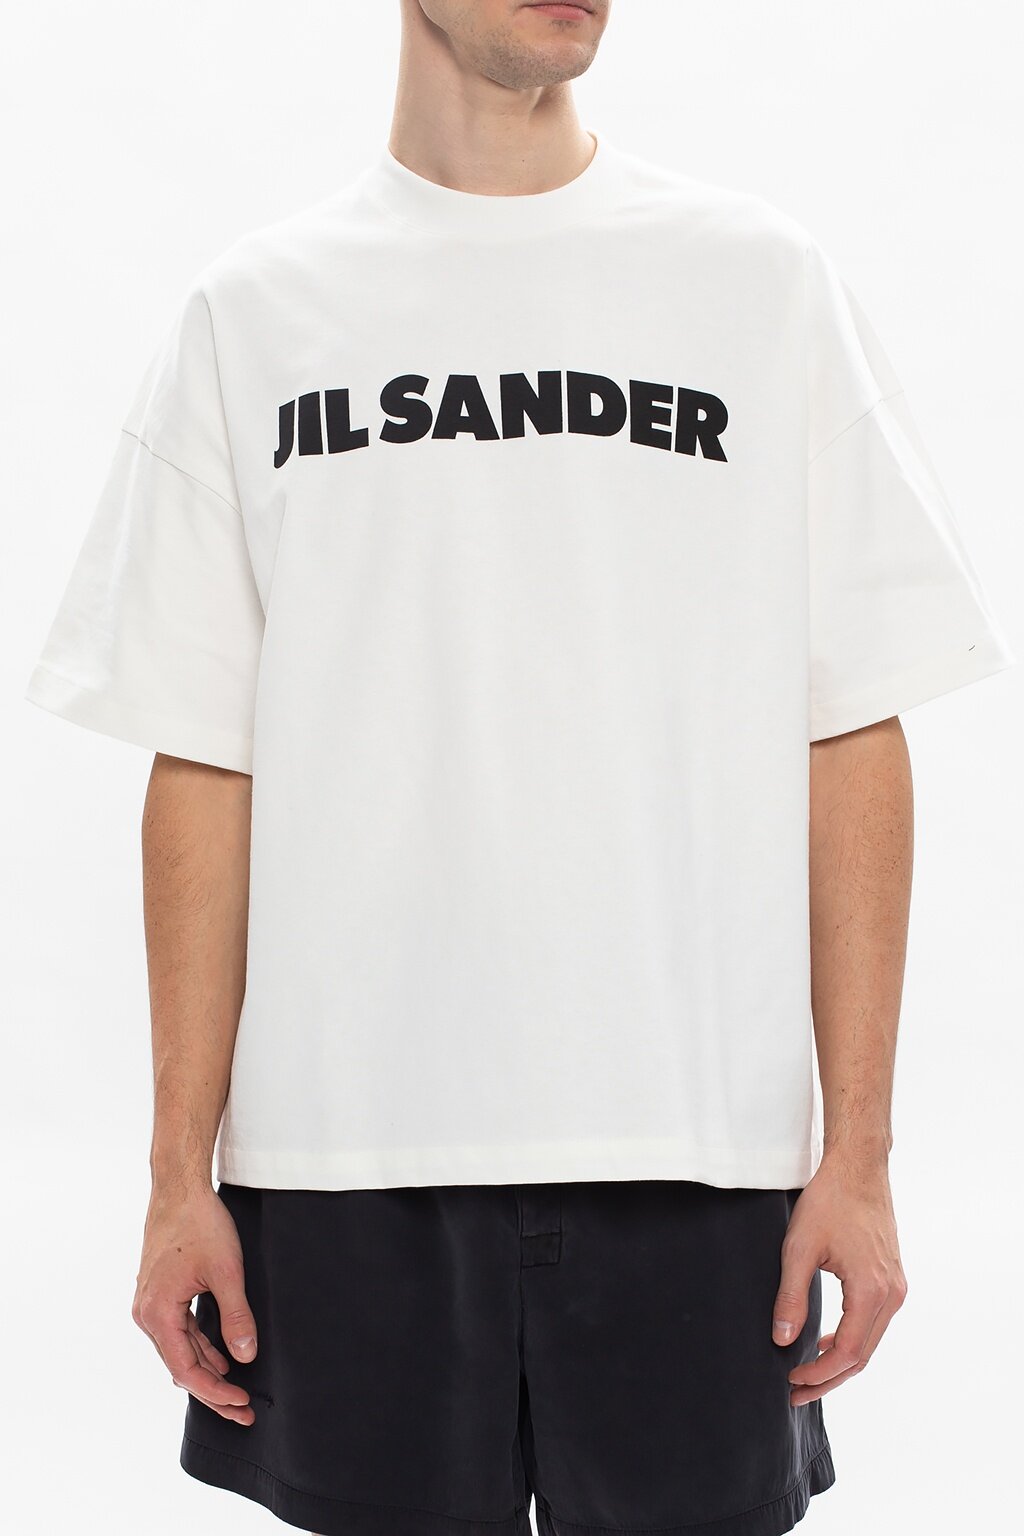 Jil Sander Shirt ถูกที่สุด พร้อมโปรโมชั่น - พ.ค. 2022 | BigGo เช็ค 